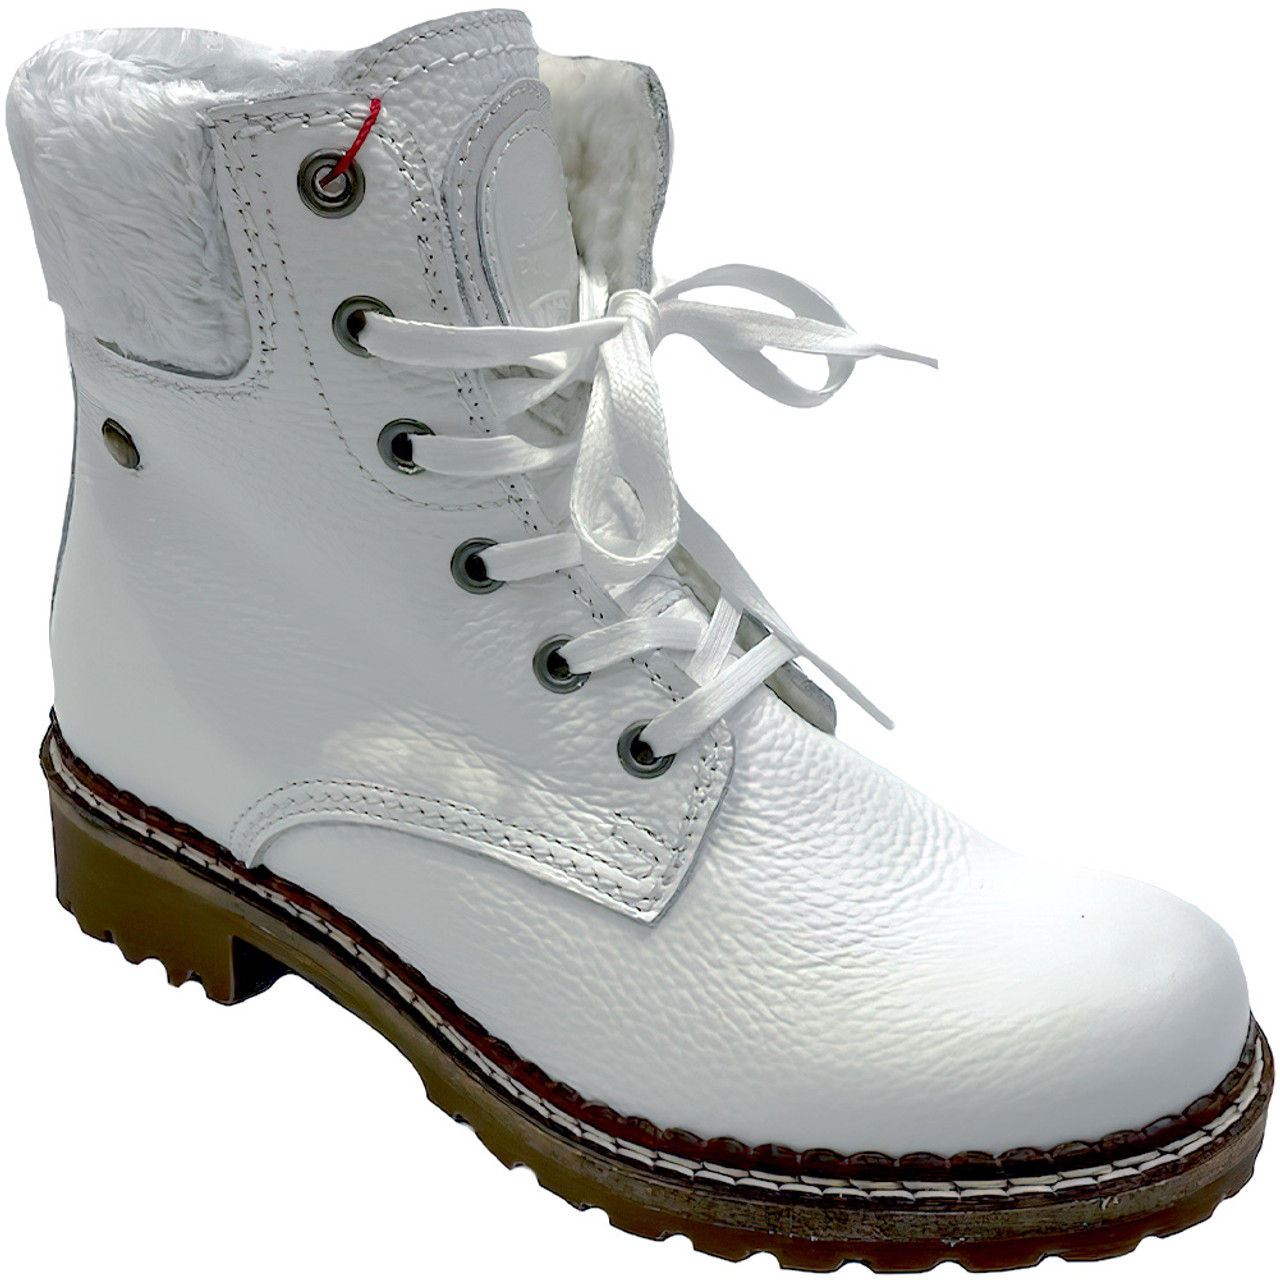 Open Box (Signs of previous use, stain on left shoe): PAJAR TOBY NYLON  WHITE Nylon Size-39 (PDPAB00319.01-WHITE-39)